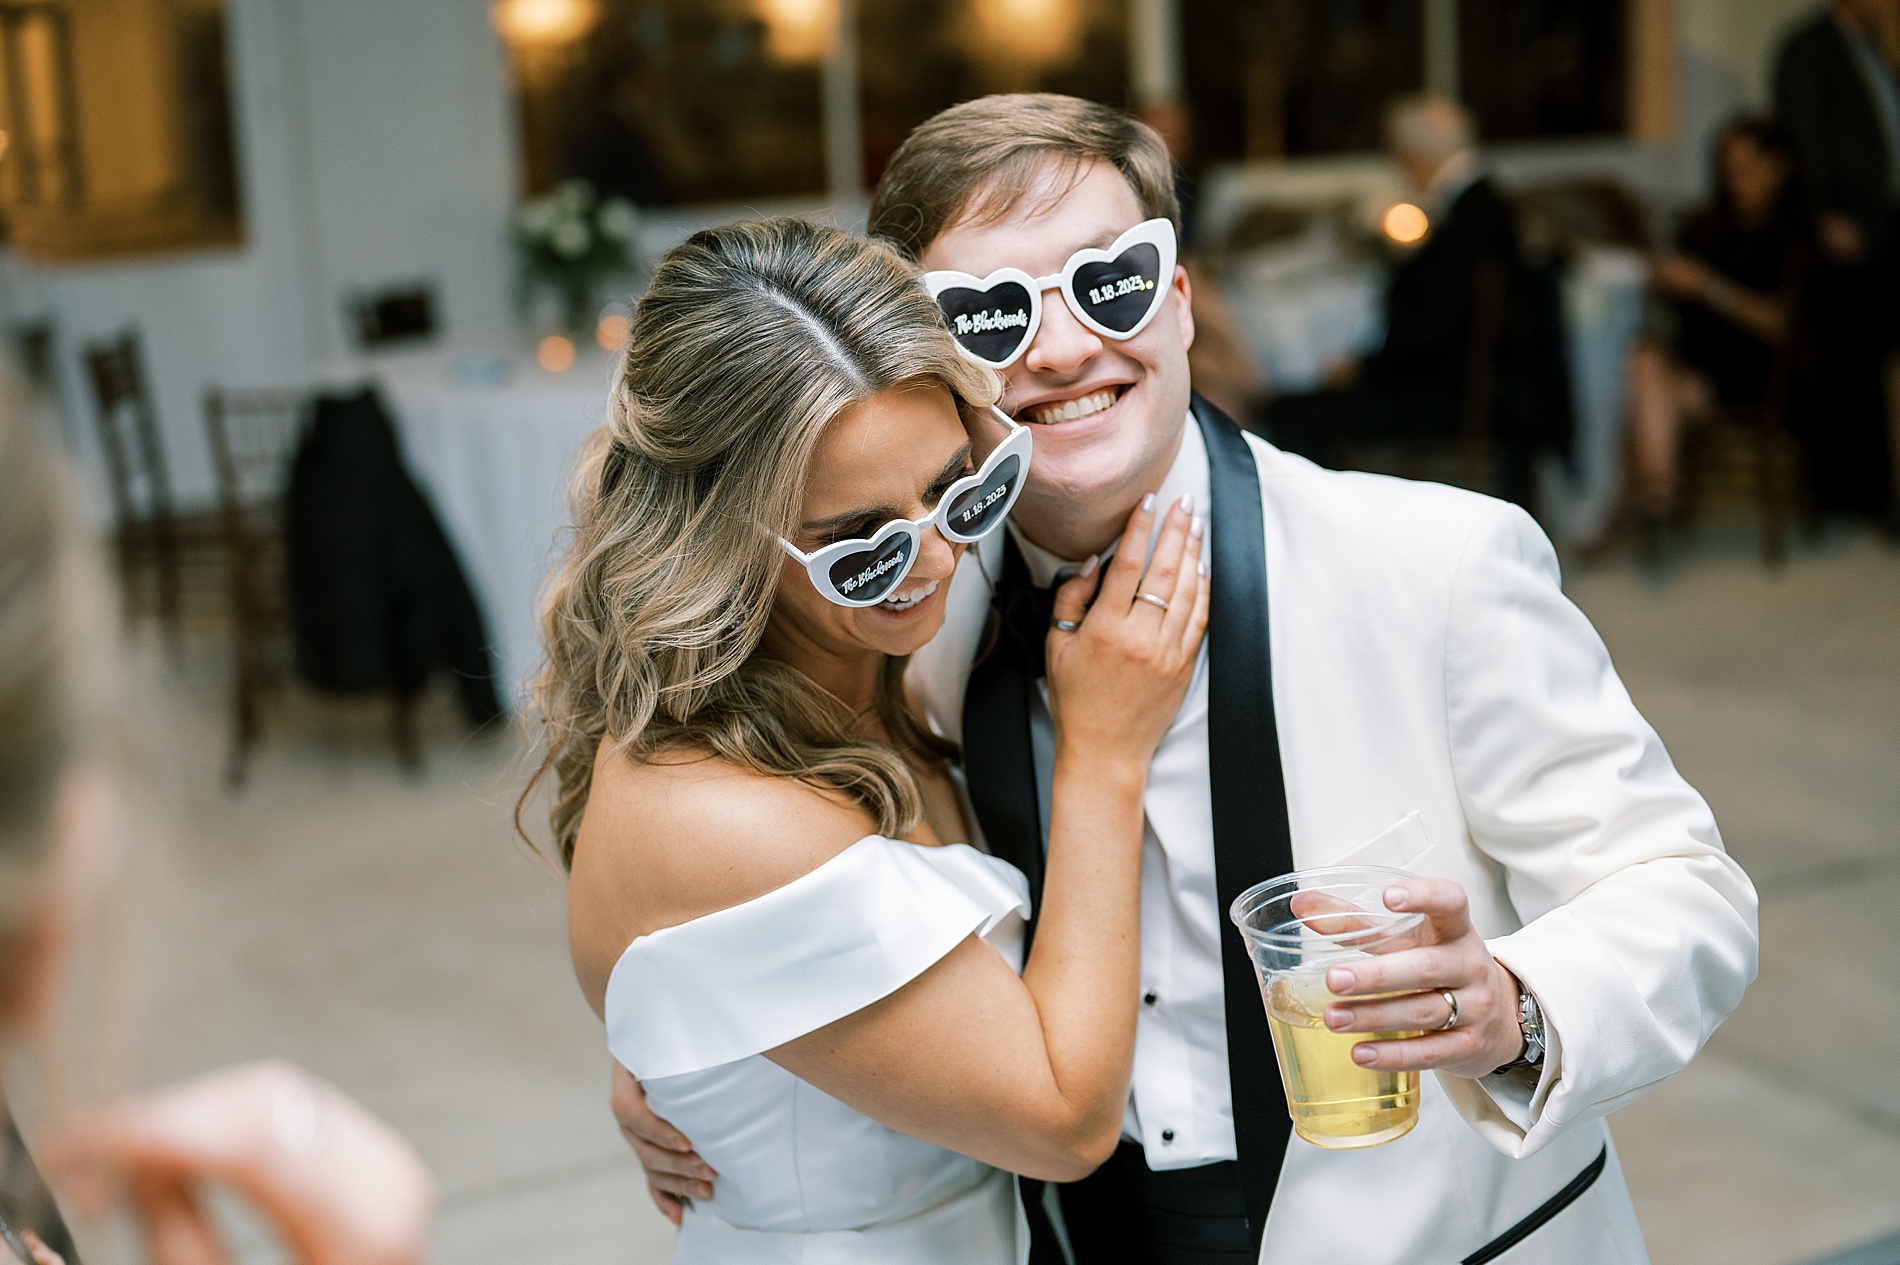 bride and groom wearing sunglasses on the dance floor